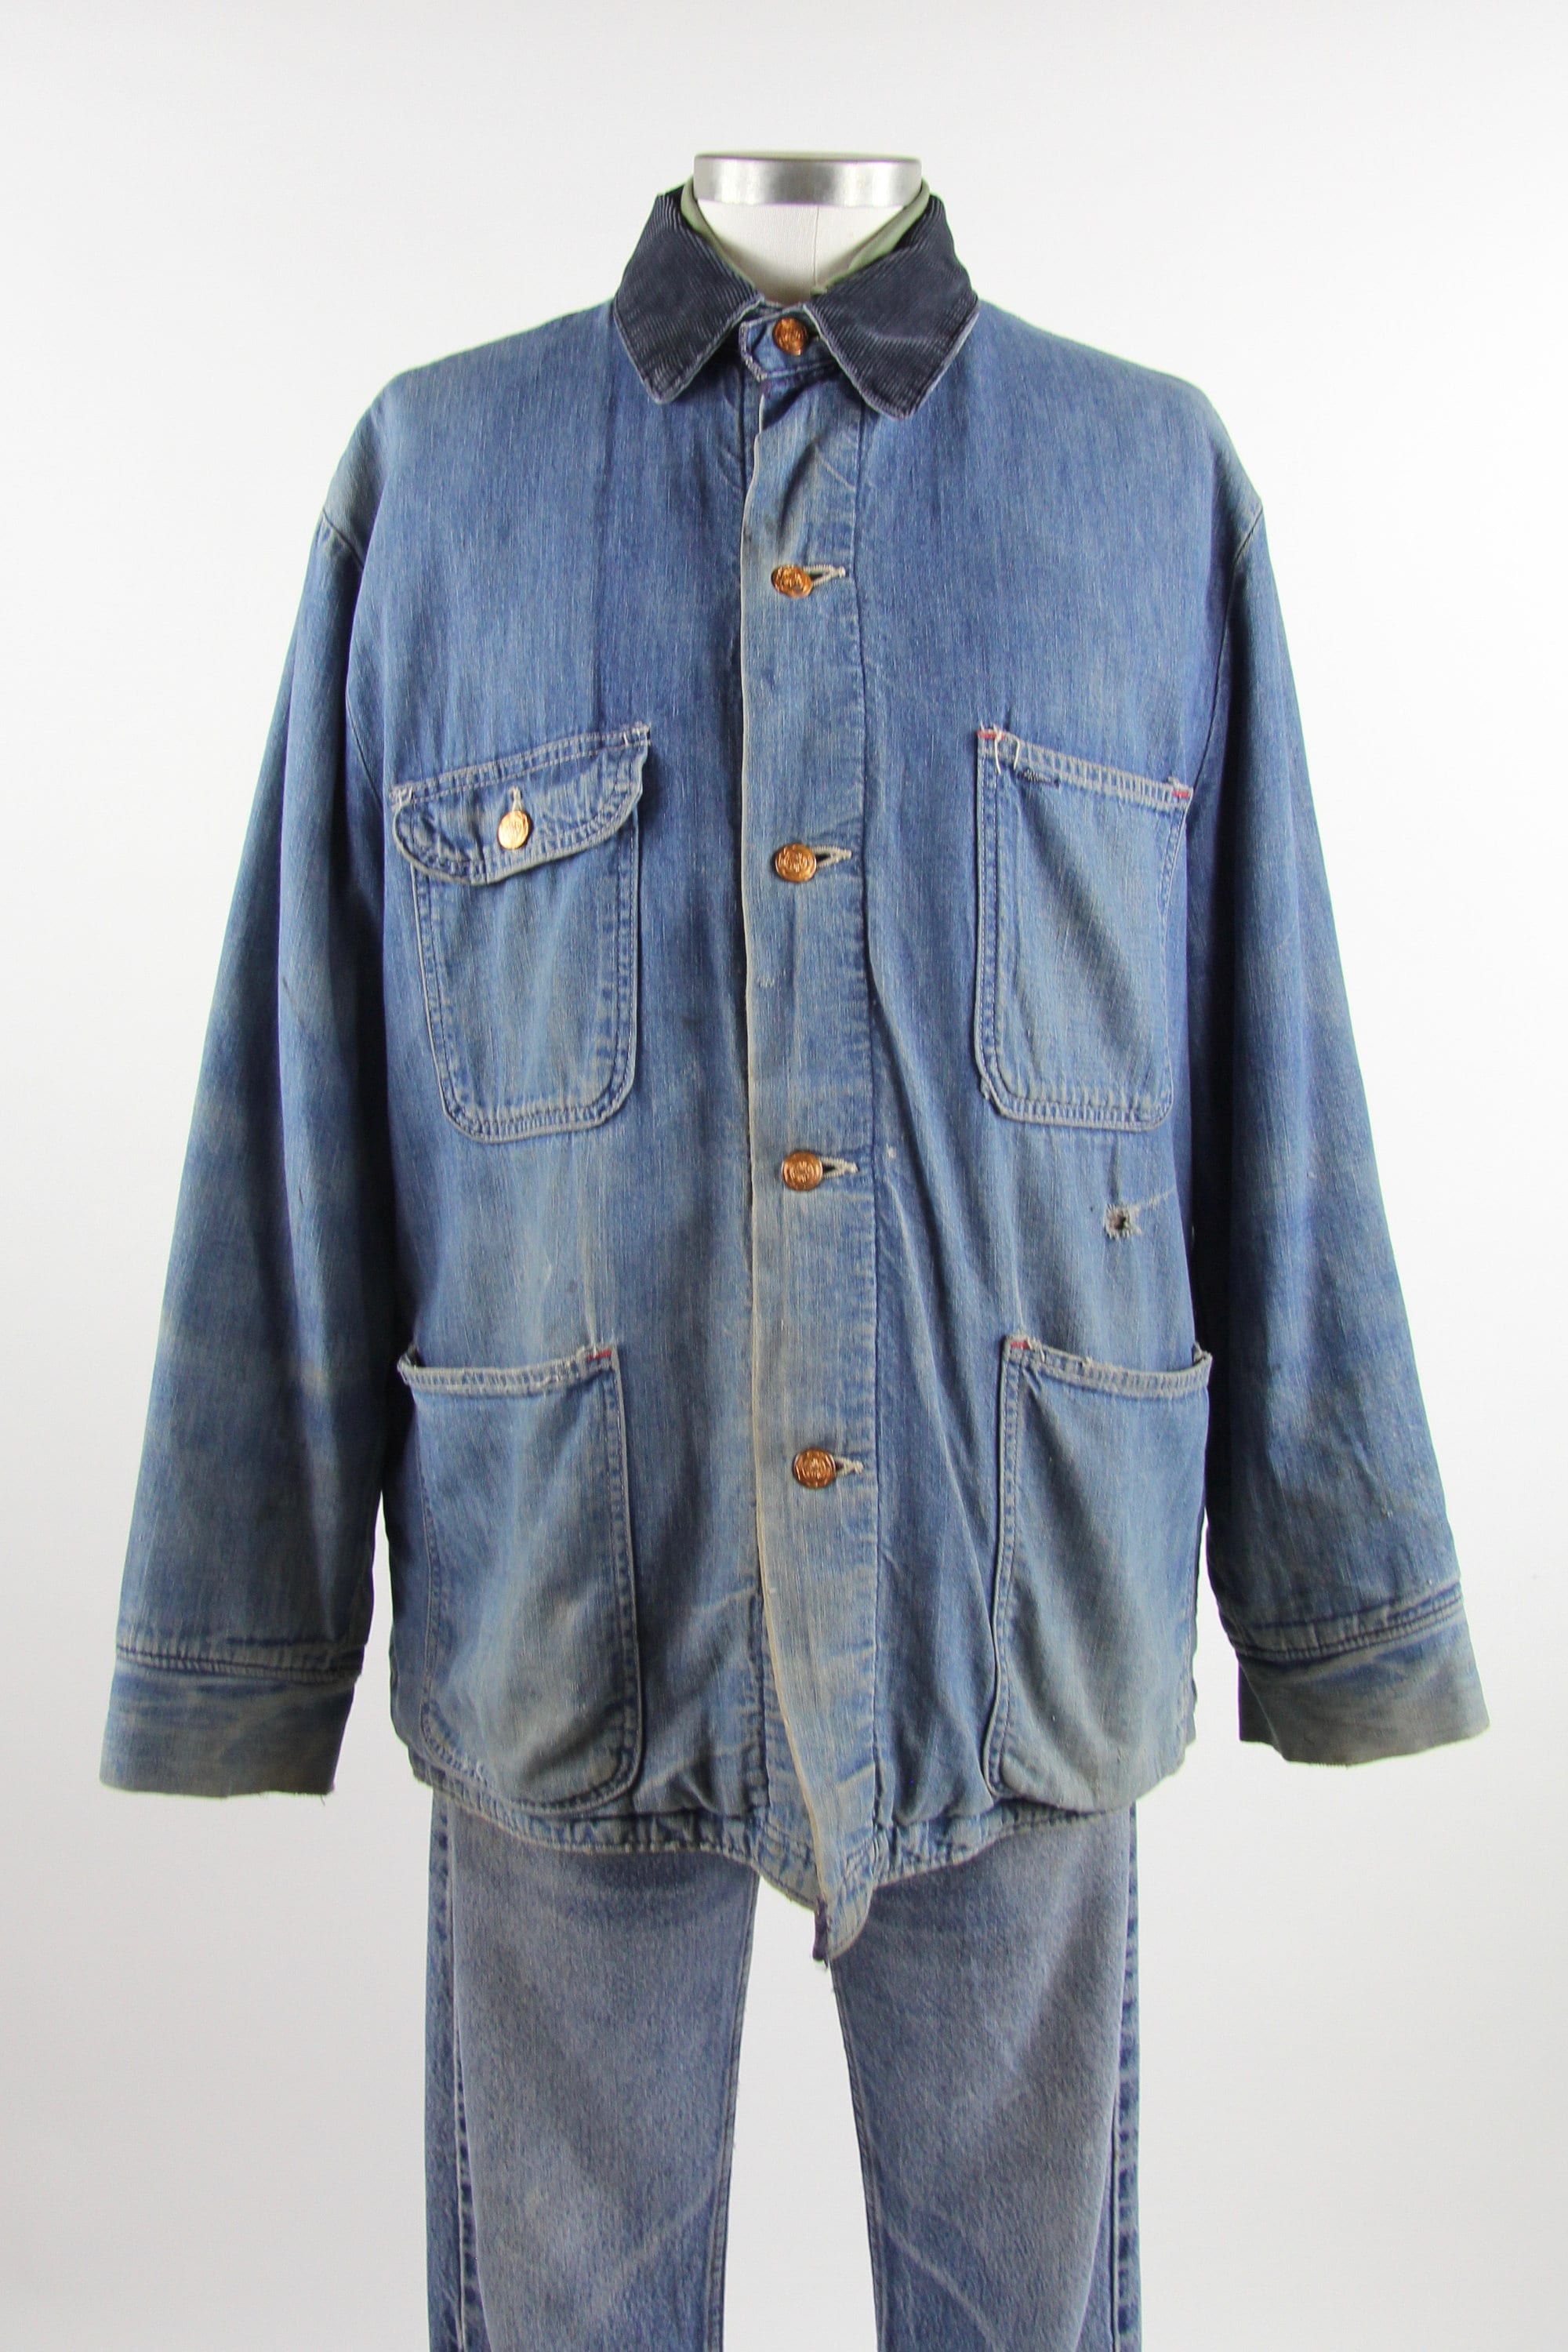 60's Chore Coat Men's Vintage Farm Jacket with Wool Lining Size Large